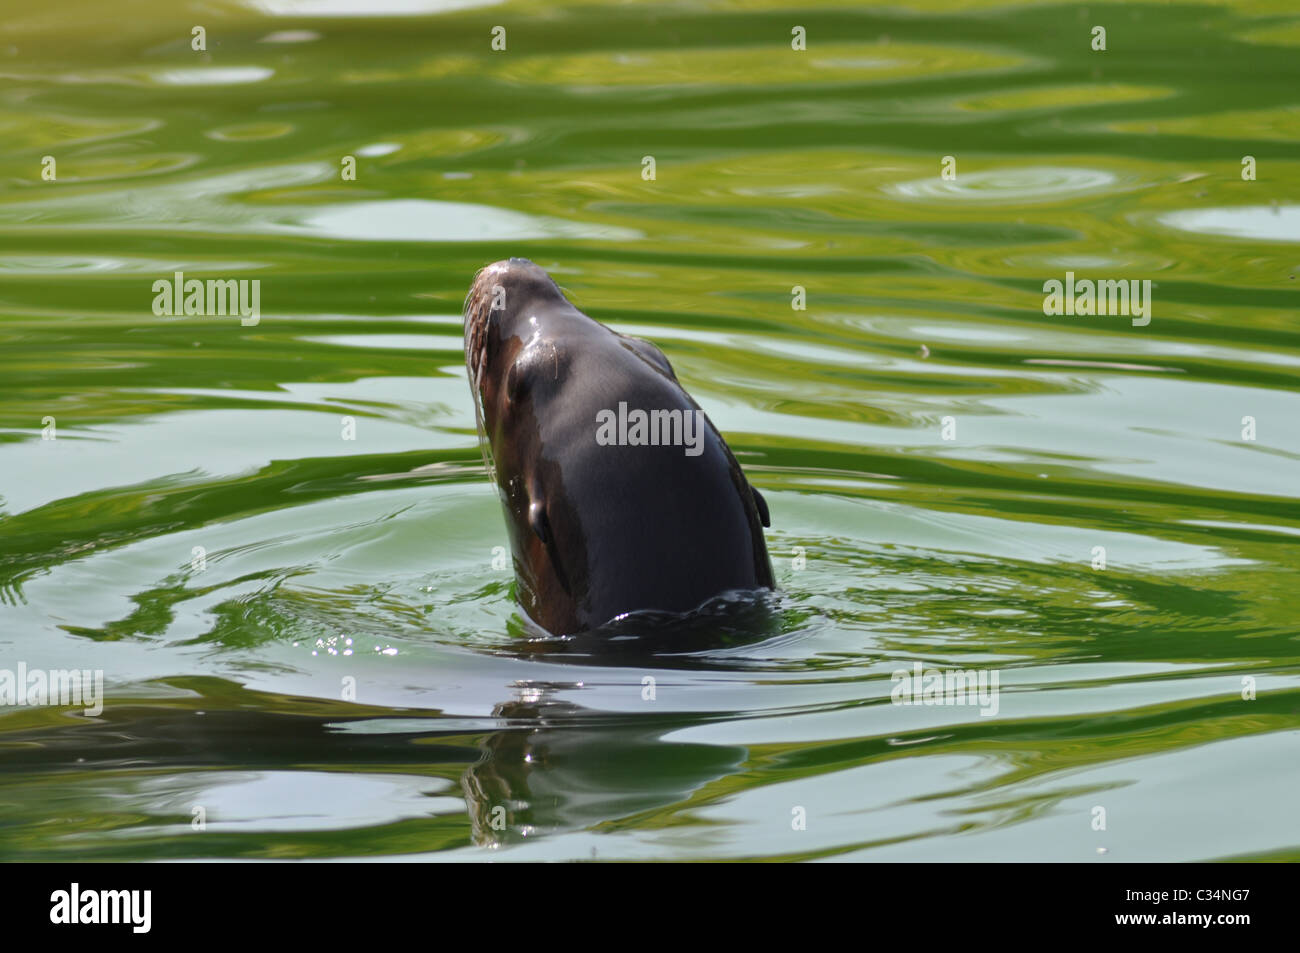 Sealion sea lion in green water swimming Stock Photo